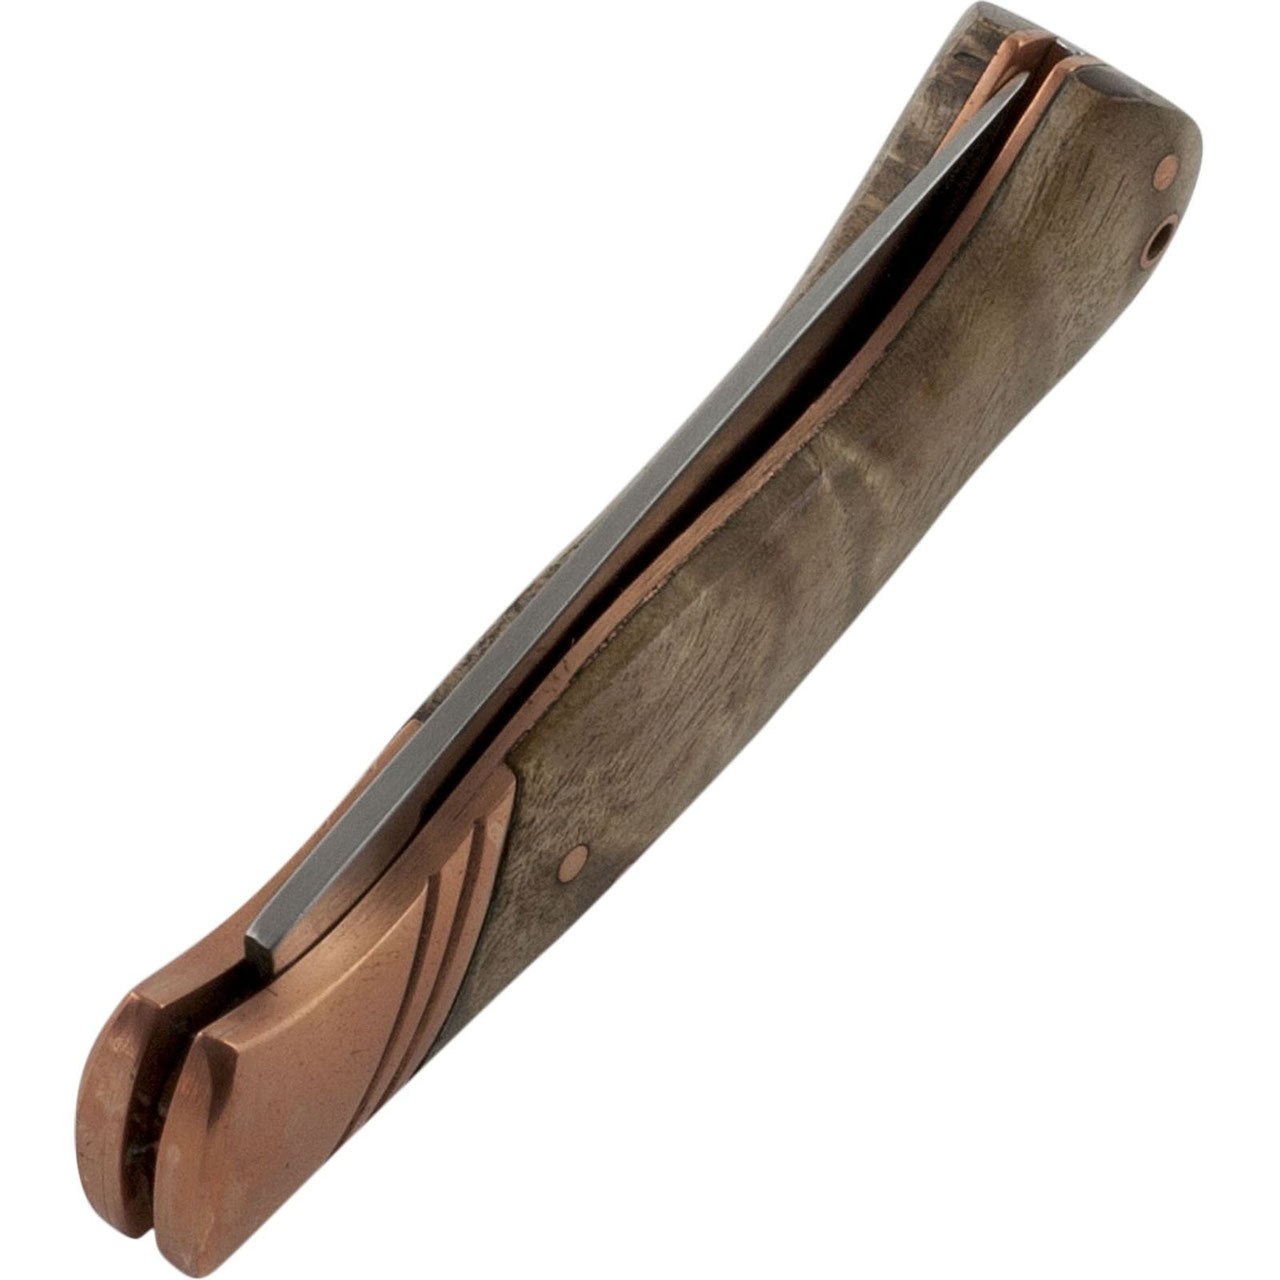 Lockback - Copper Bolster, Small-Old Forge-OnlyKnives